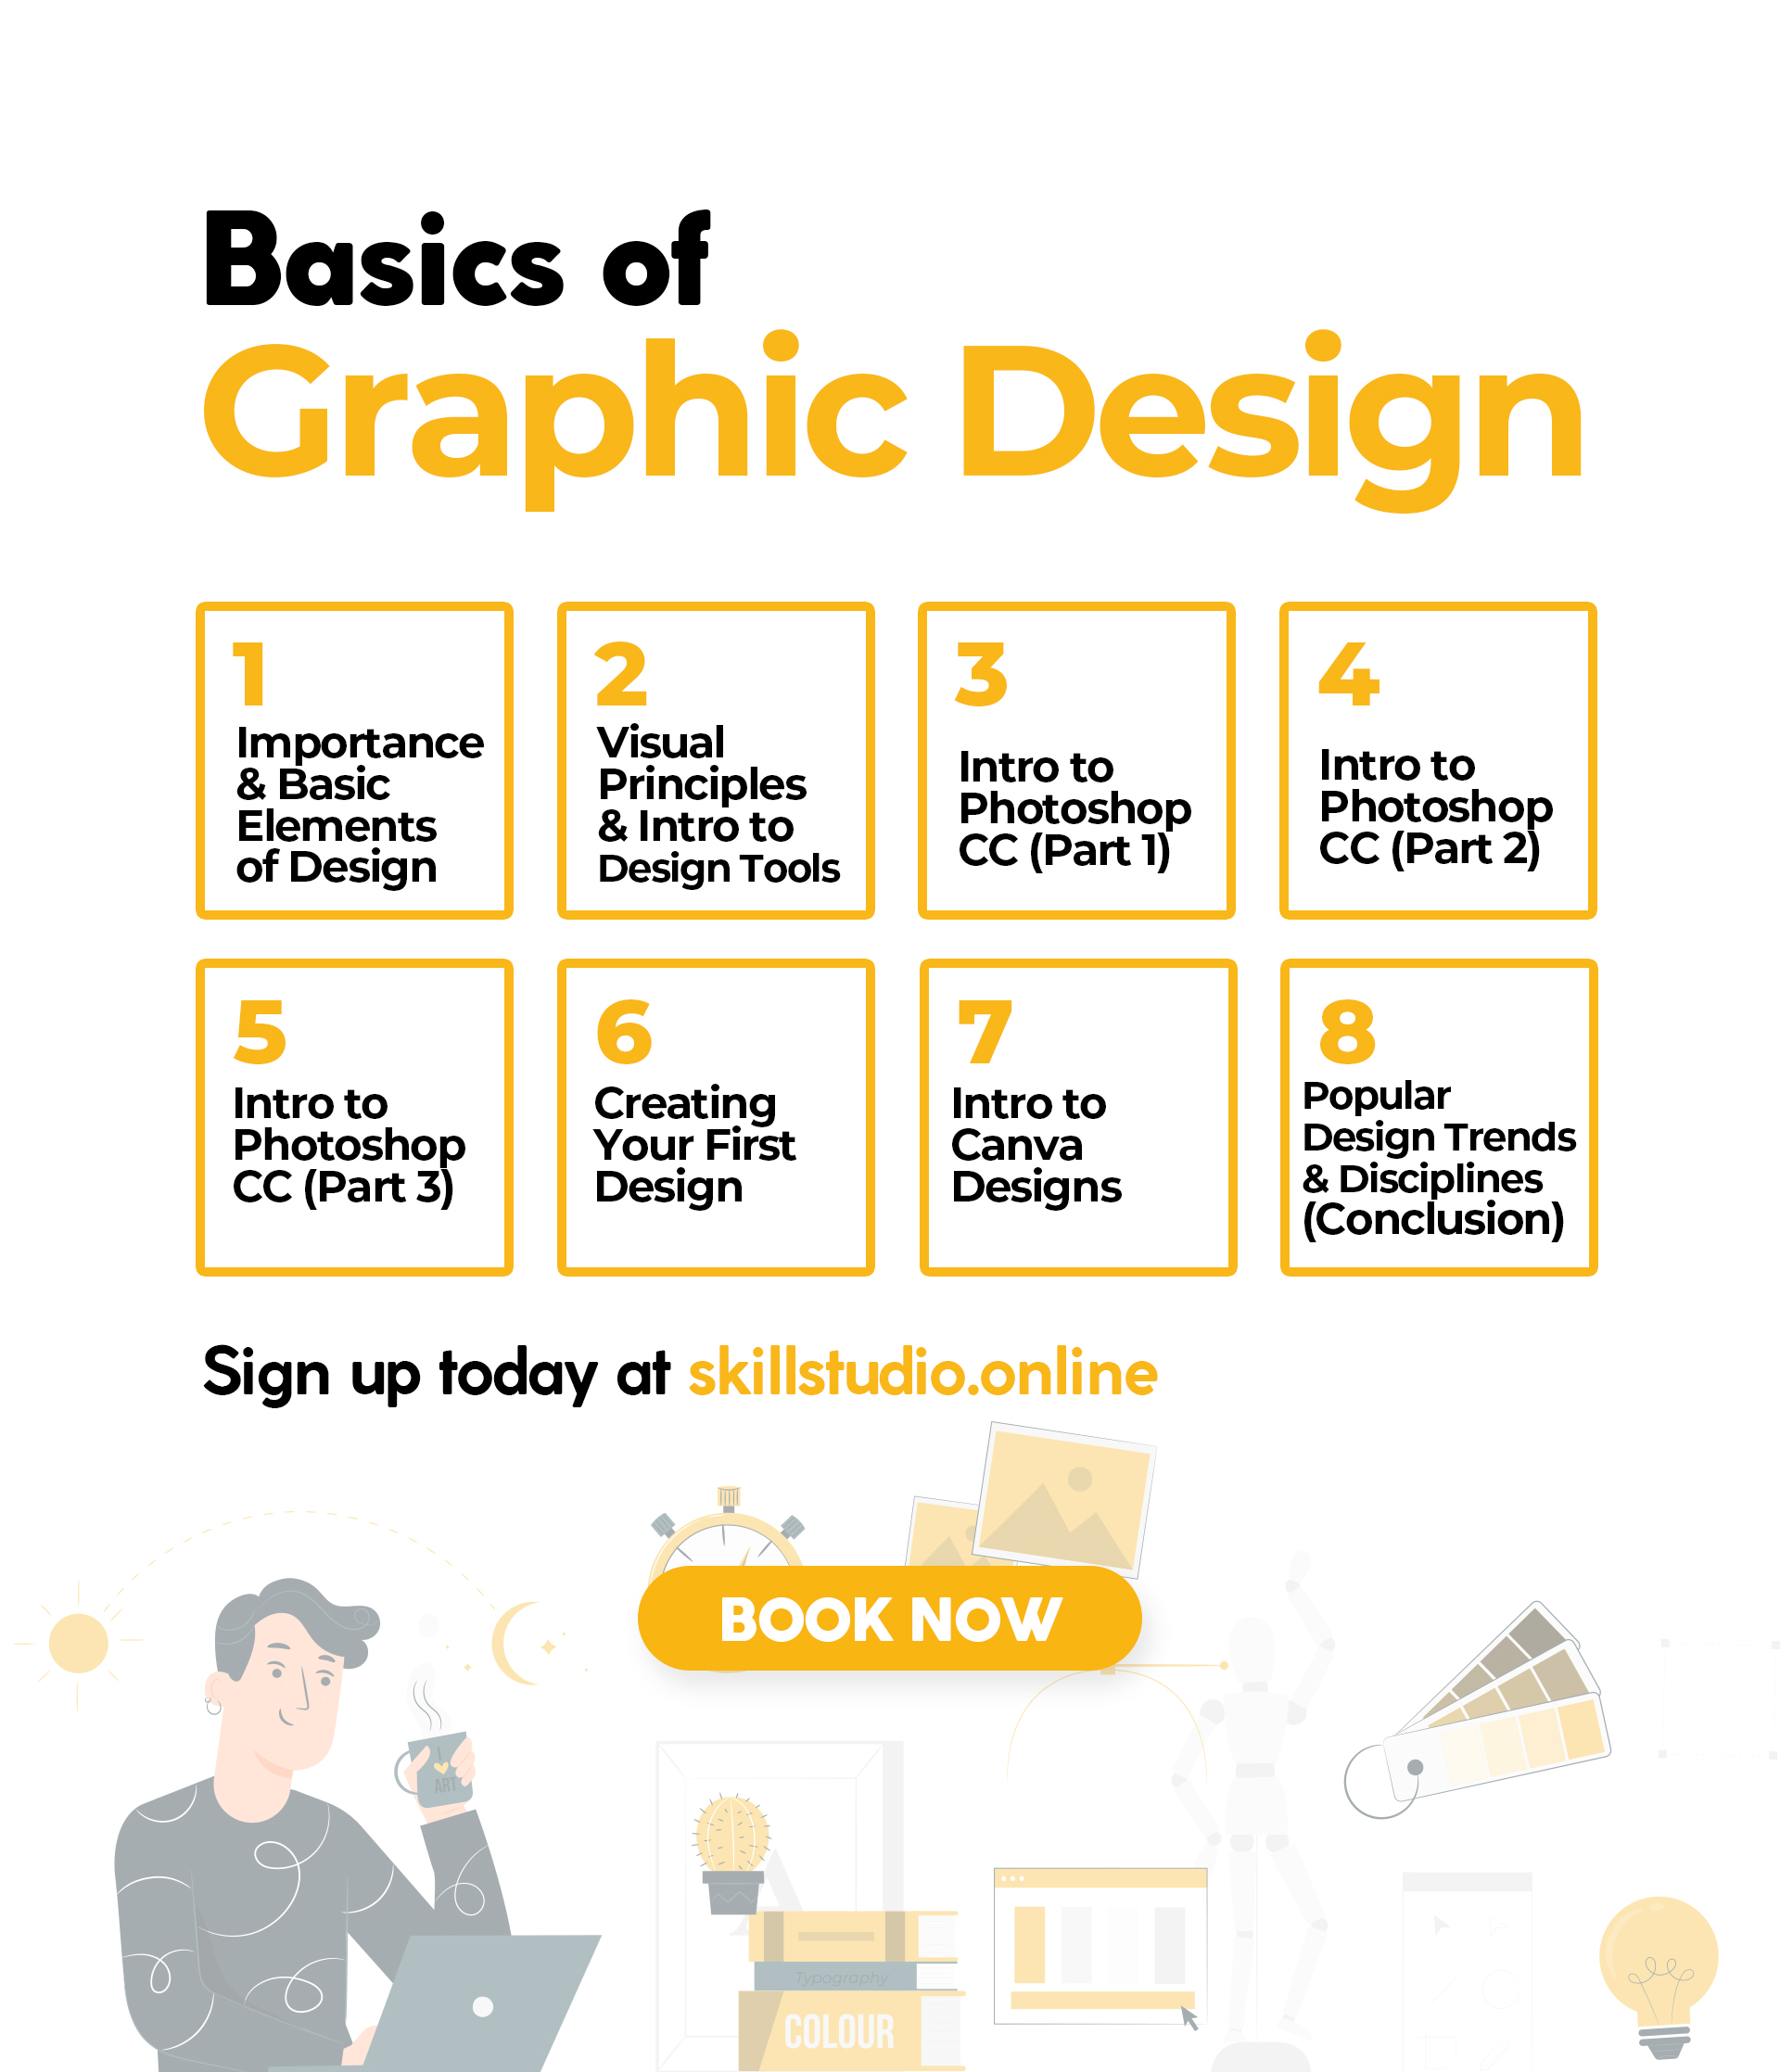 Basics of Graphic Design Course by SkillStudio.online | Skill Studio